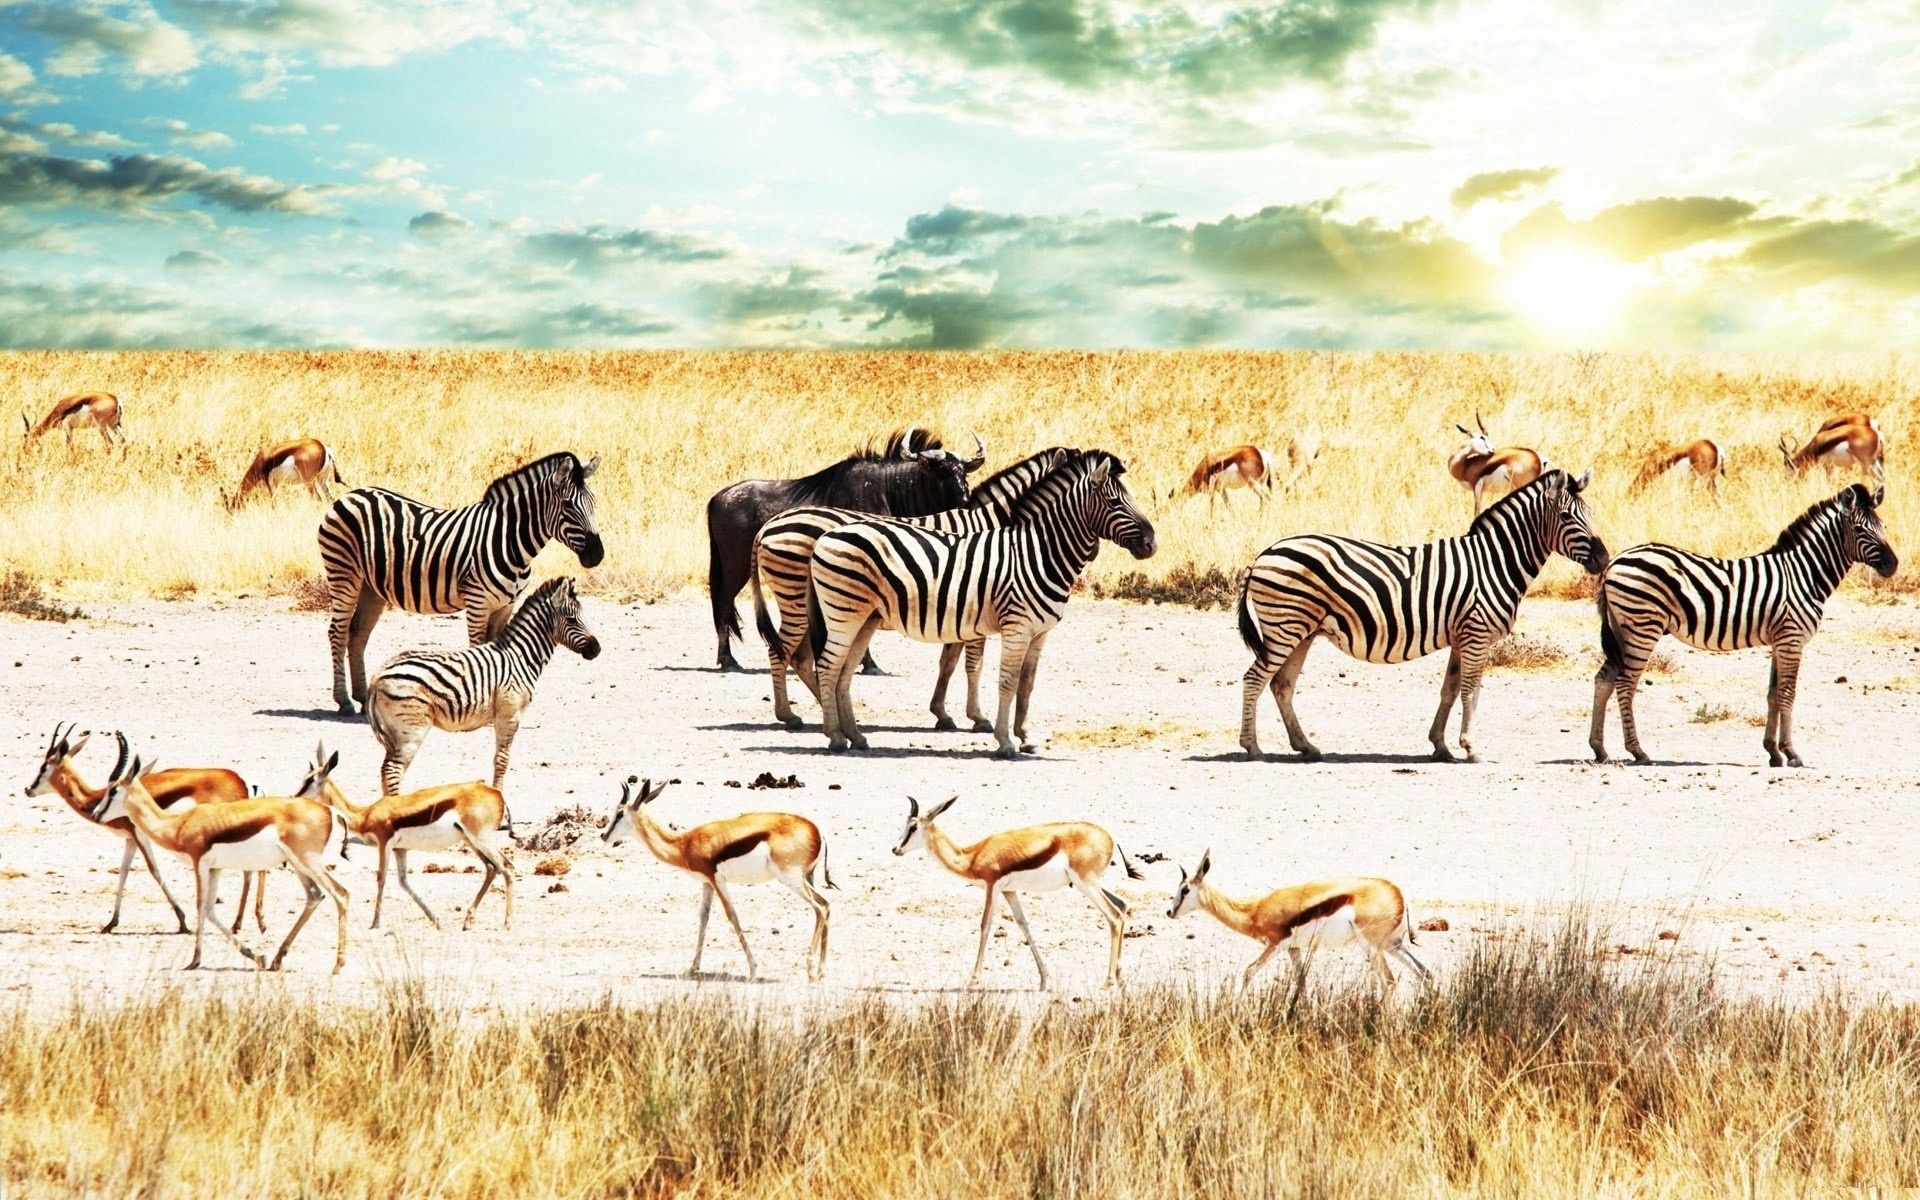 104244 завантажити картинку тварини, небо, саванна, зебри, африка, антилопи, буйволи - шпалери і заставки безкоштовно